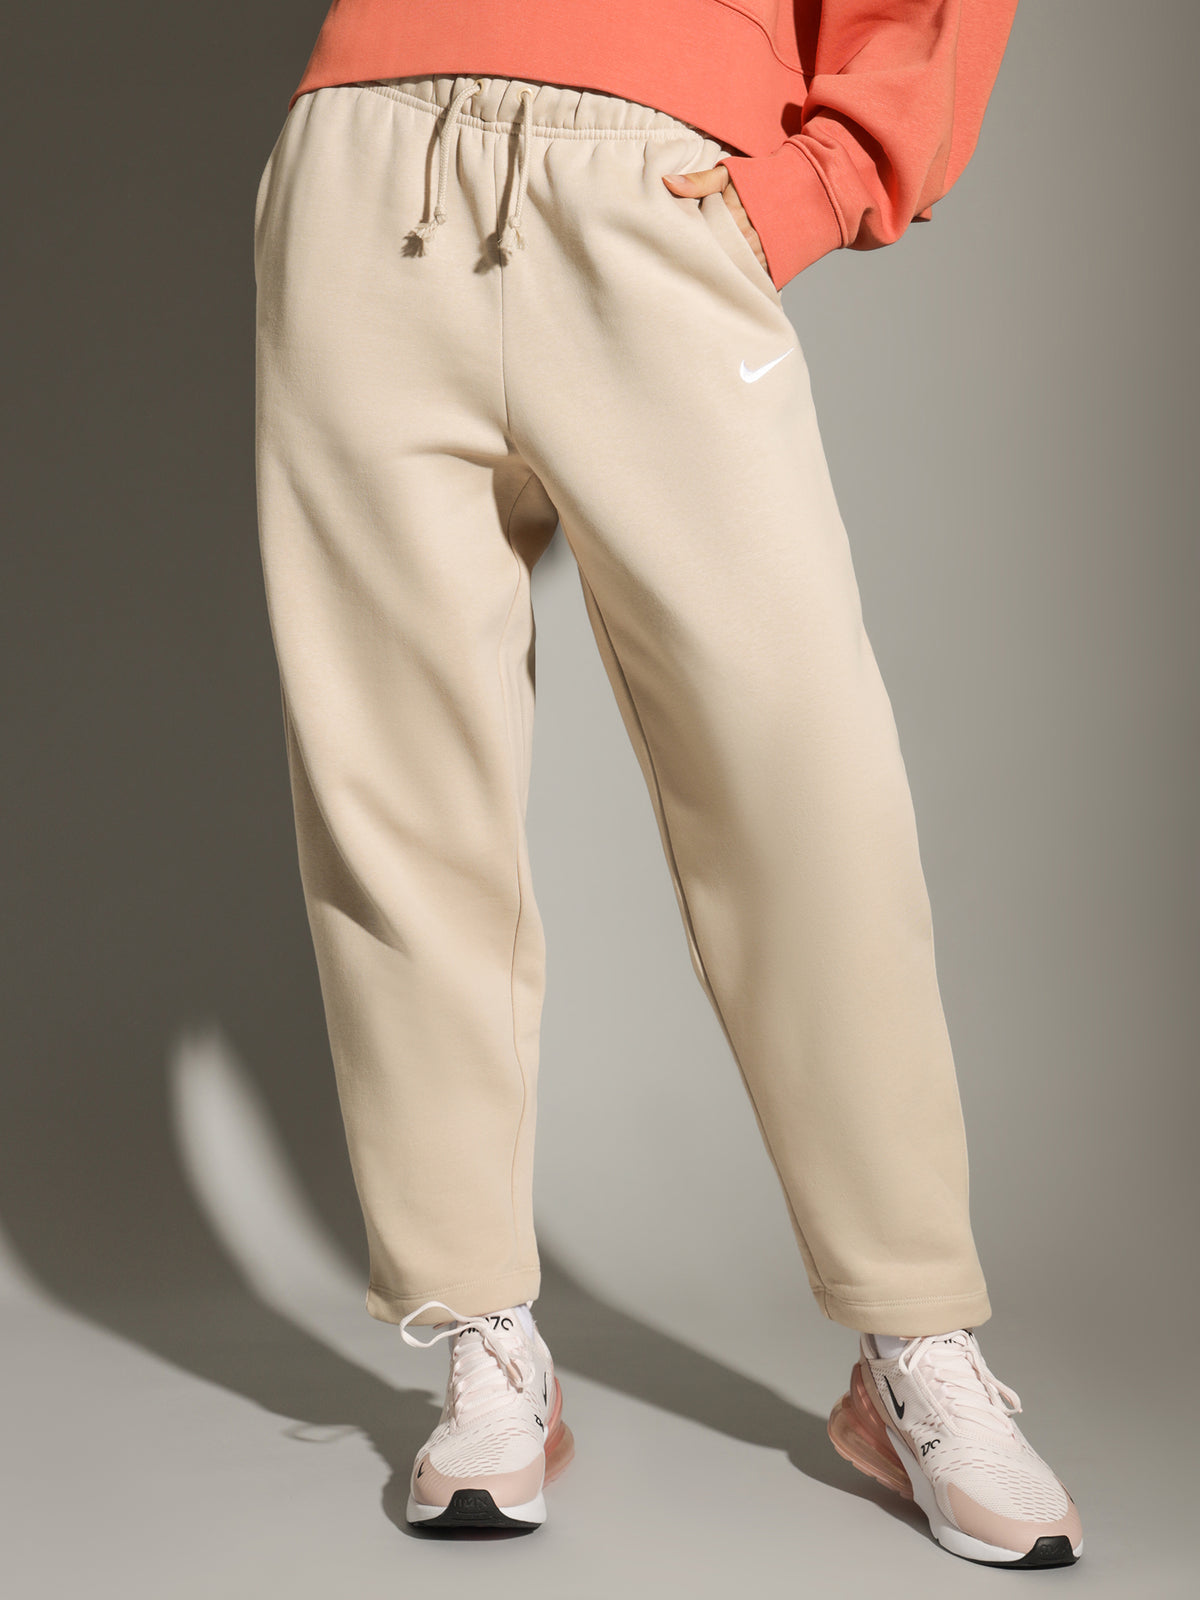 Sportswear Essential Collection Fleece Pants in Sand Drift